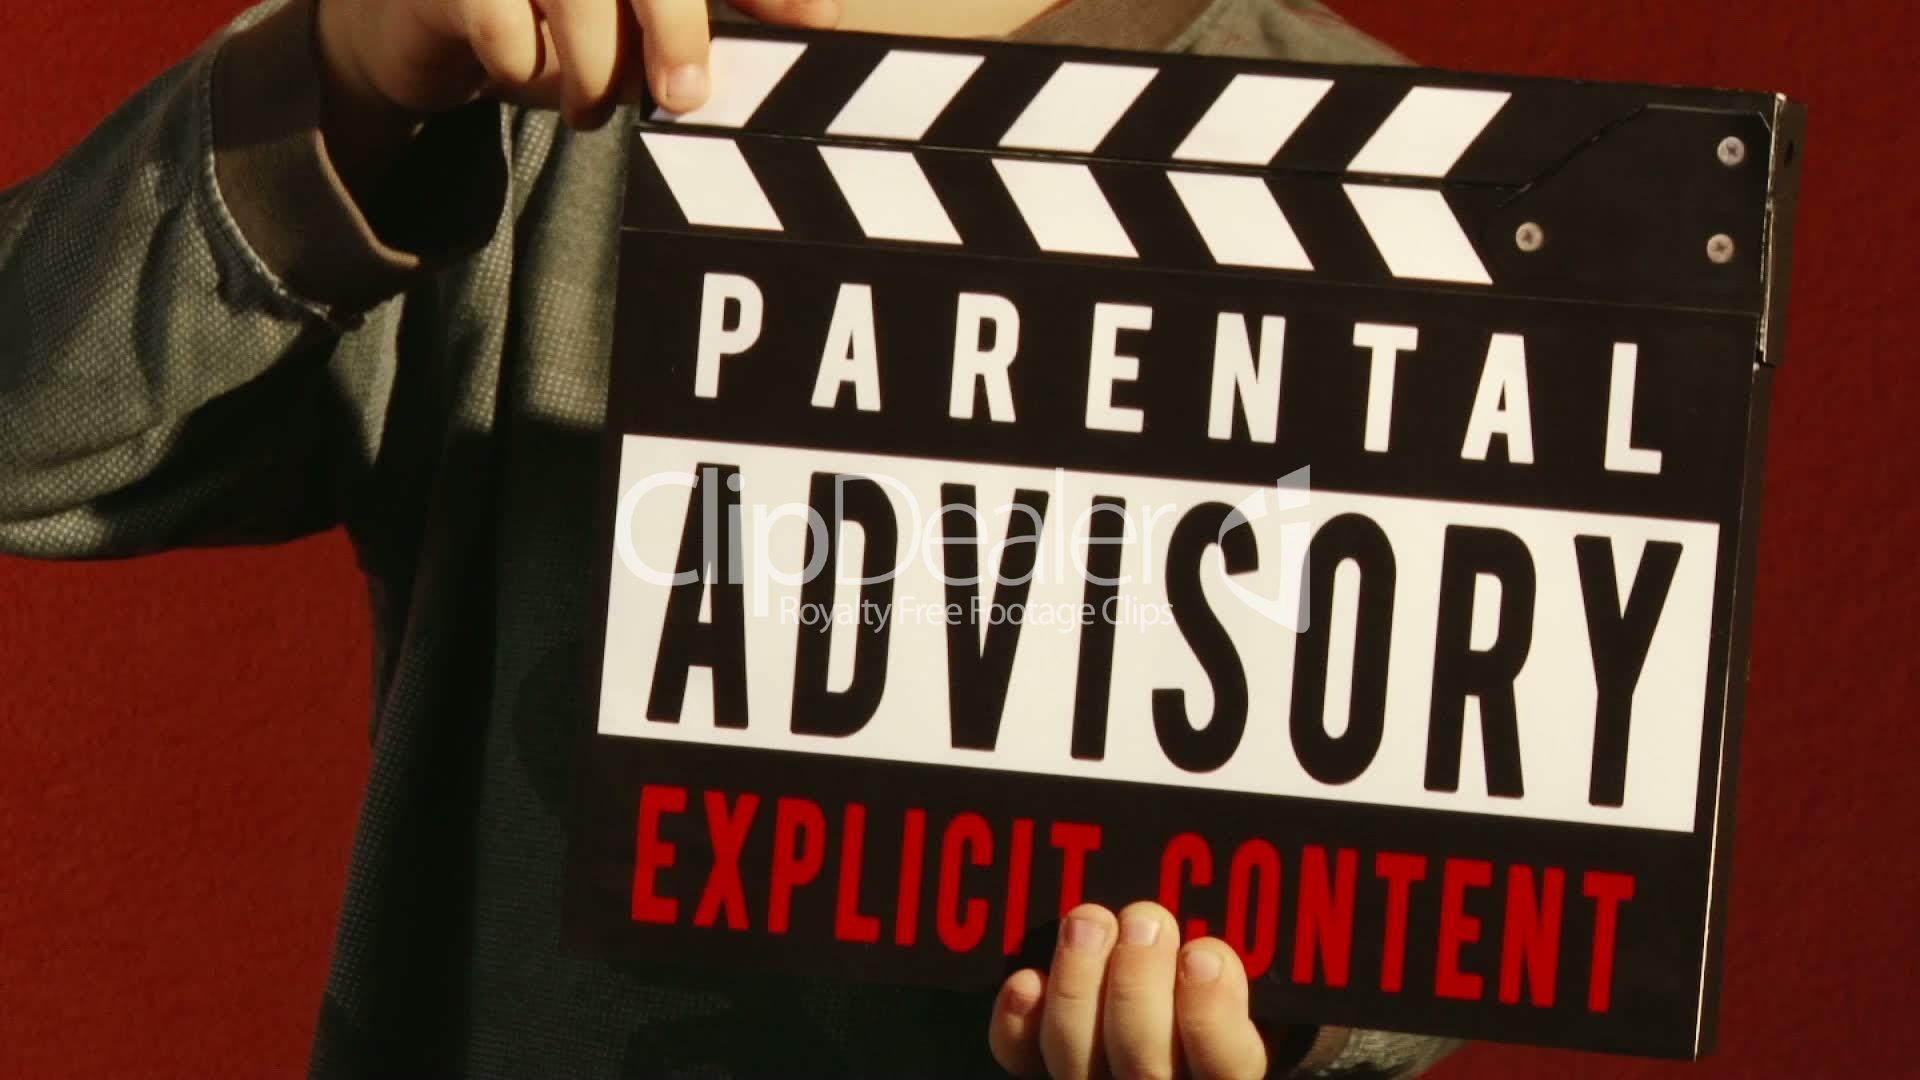 Boy, Parental Advisory Explicit Content: Royalty Free Video